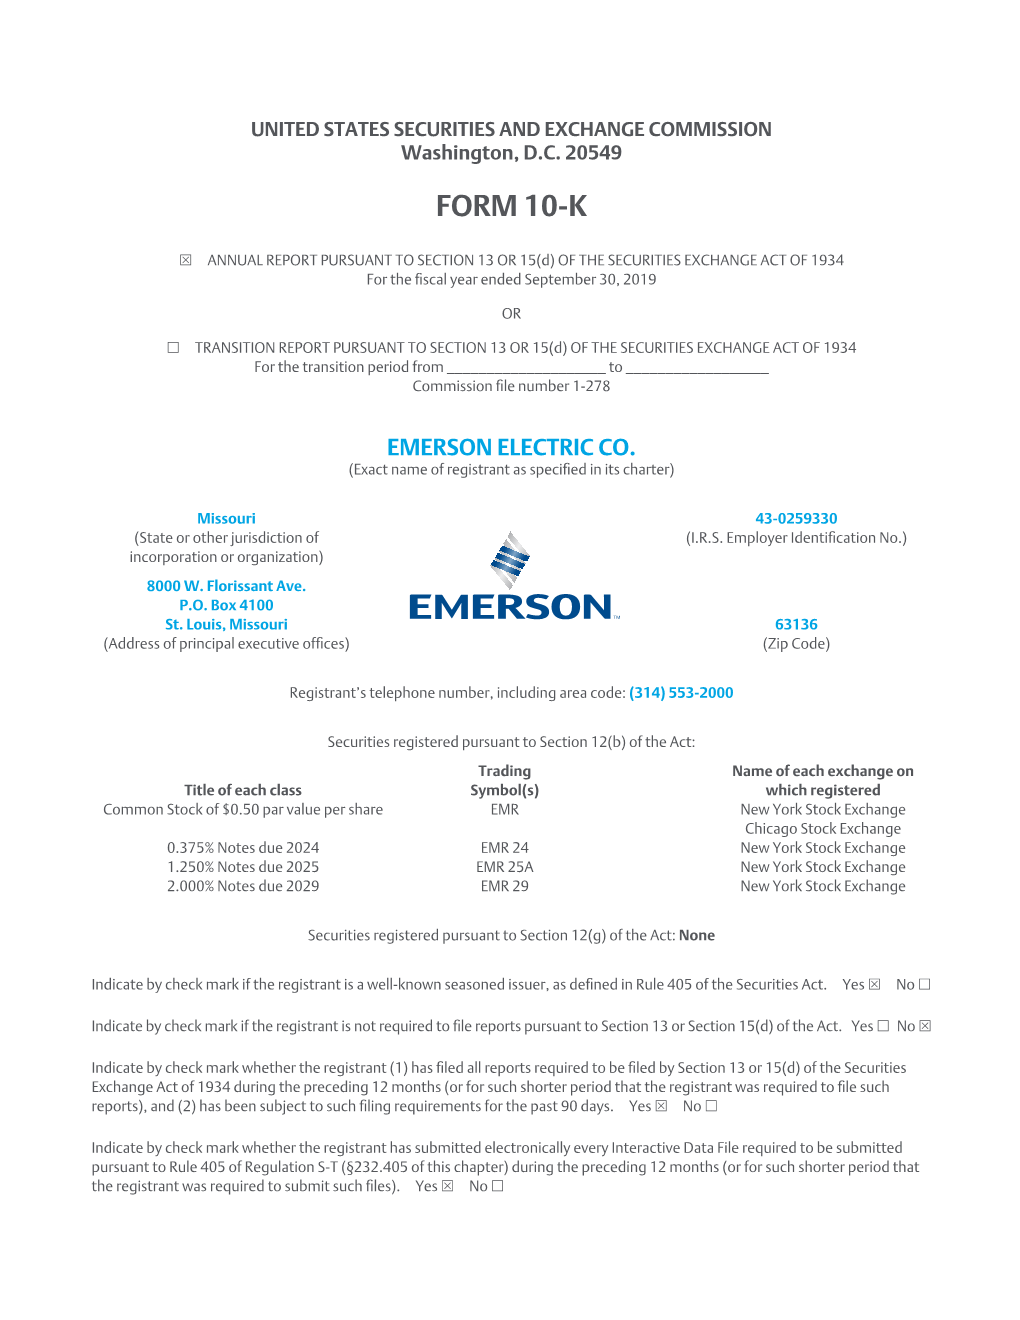 Emerson 2019 Form 10-K